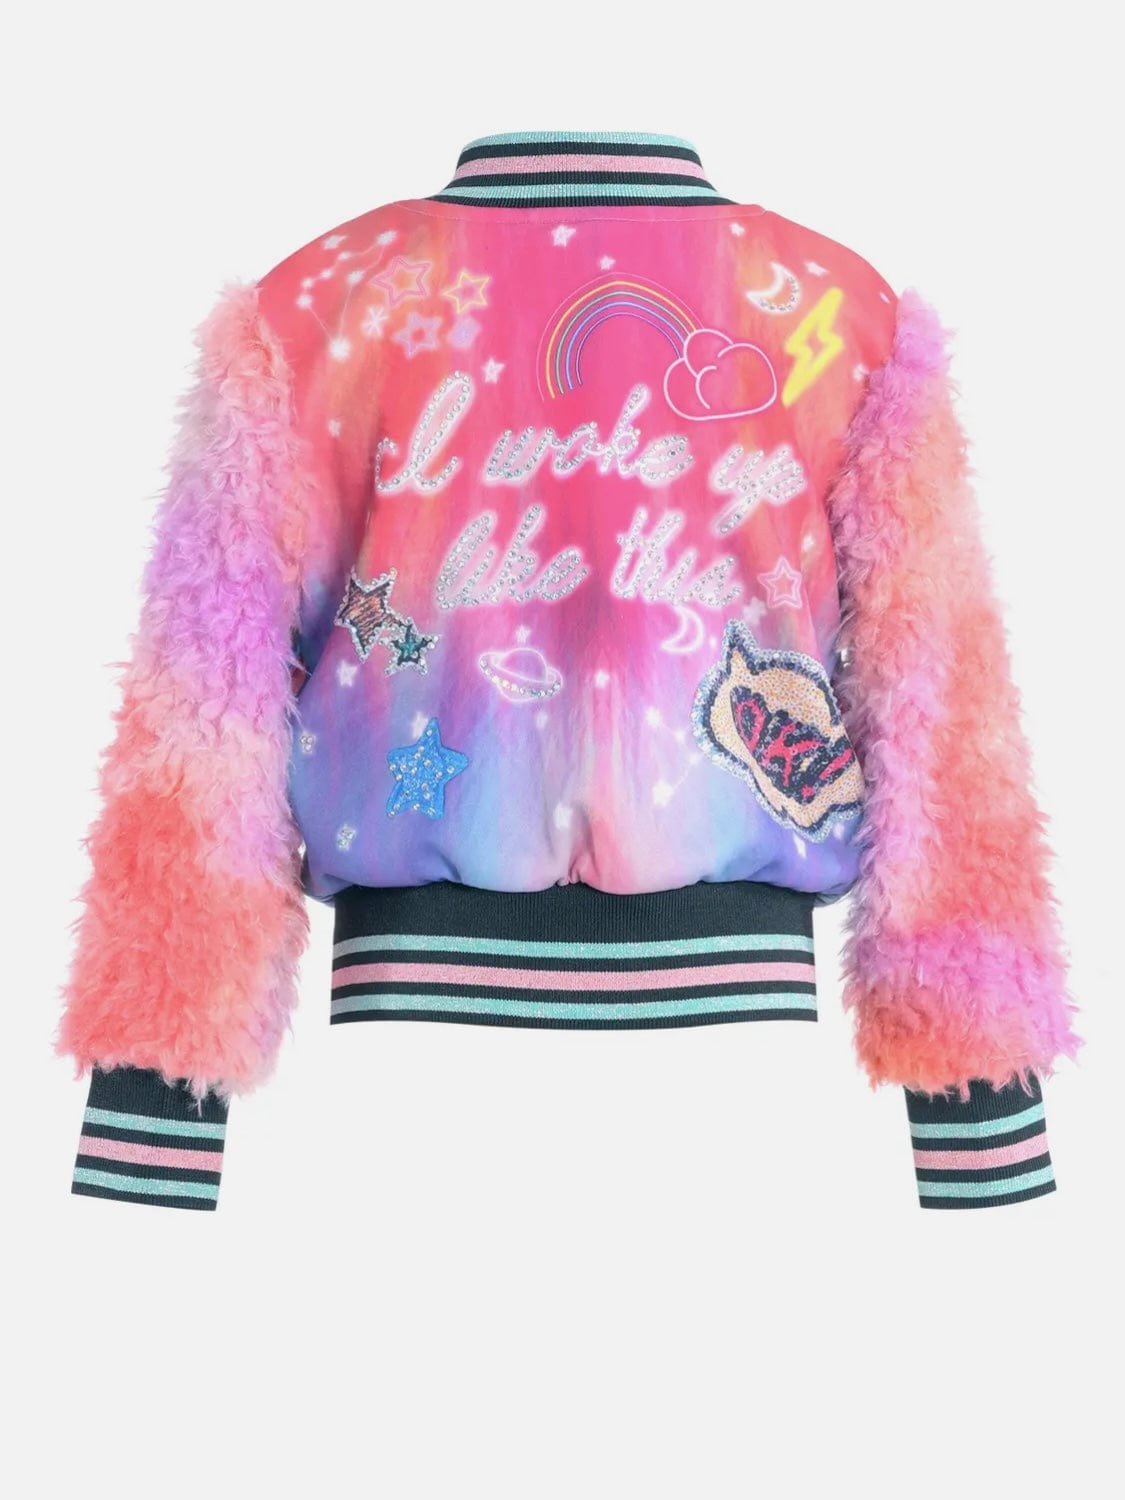 Fashionably, BBK! Girls Printed Bomber Jacket